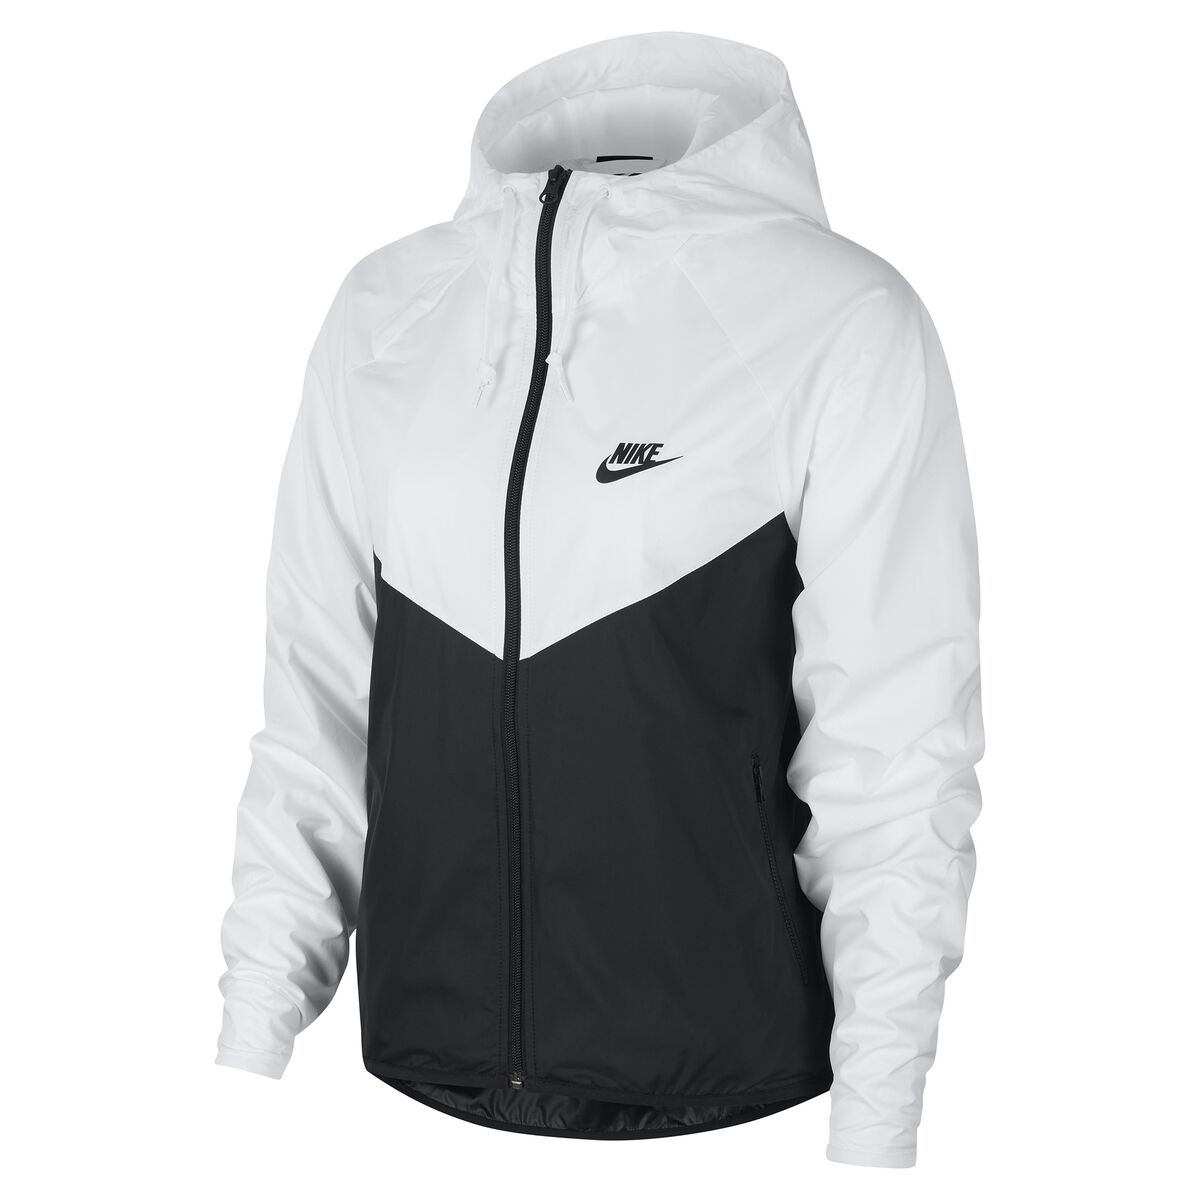 Nike Corta-vento bicolor Windrunner jacket, com capuz   Preto/Branco